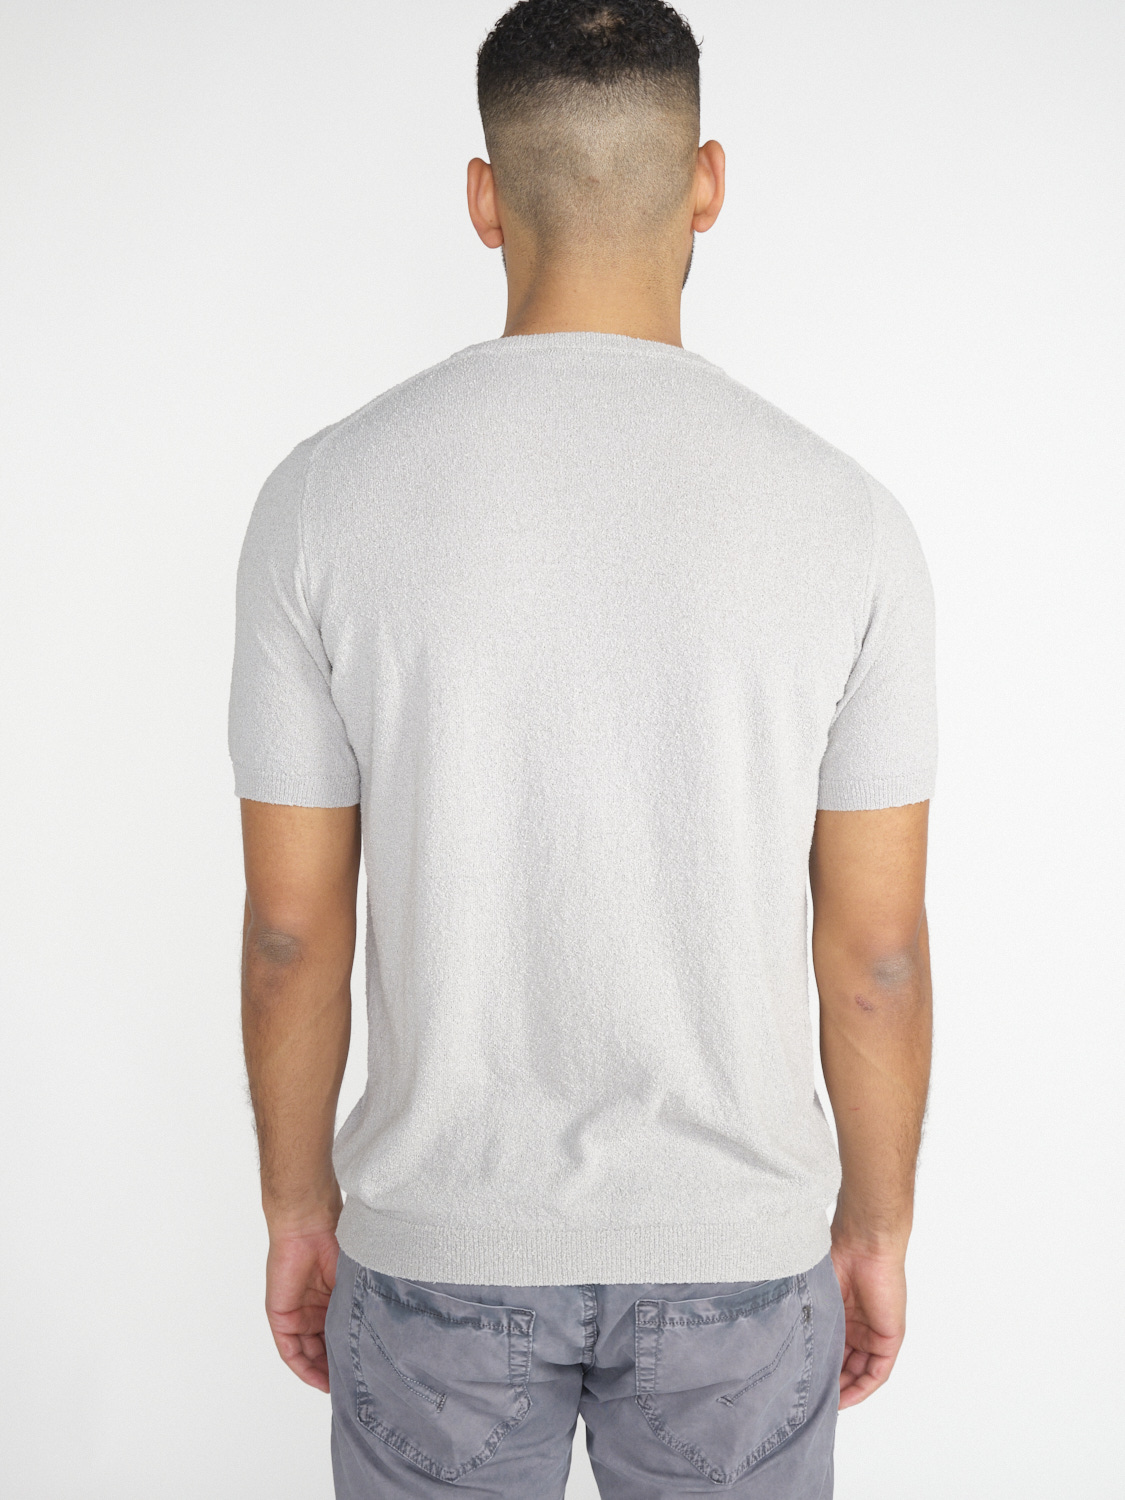 Stefan Brandt Eli 30 - Crew Neck T-Shirt made of cotton grey XL